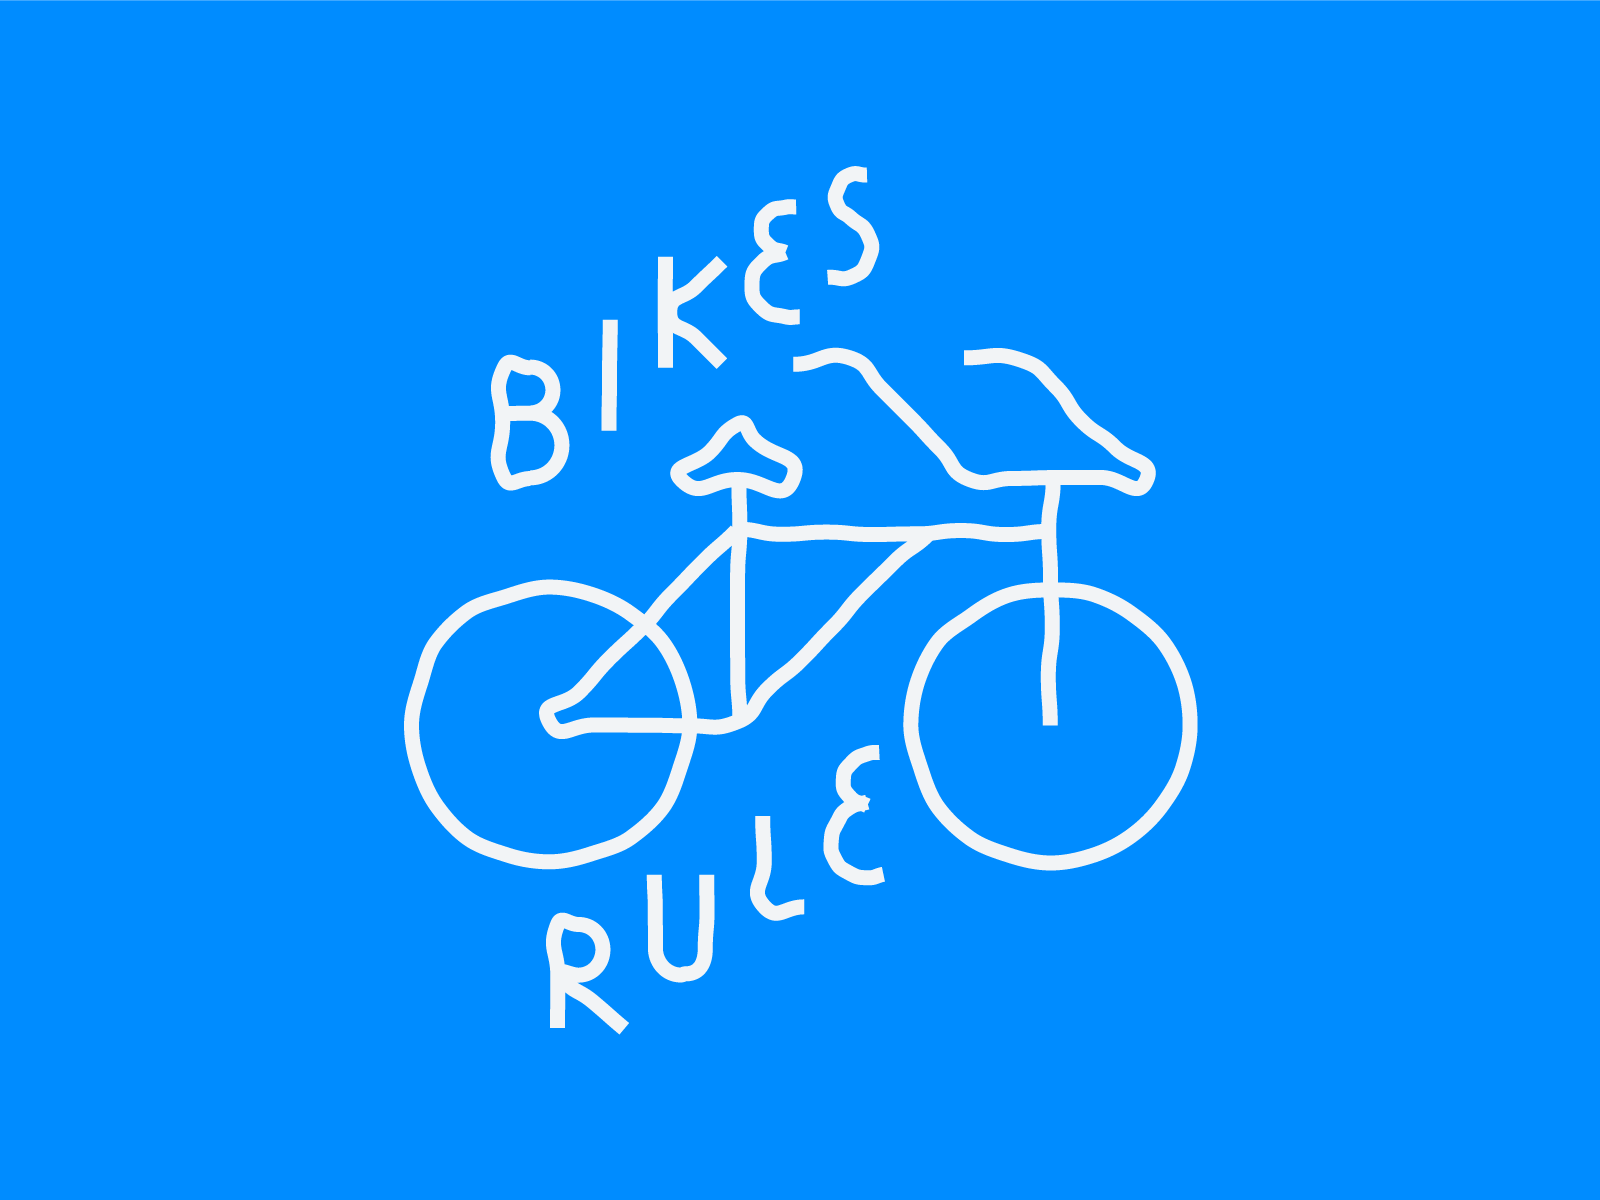 Bikes Rule bikes bike icon linework illustrations letsride ride rules illustration